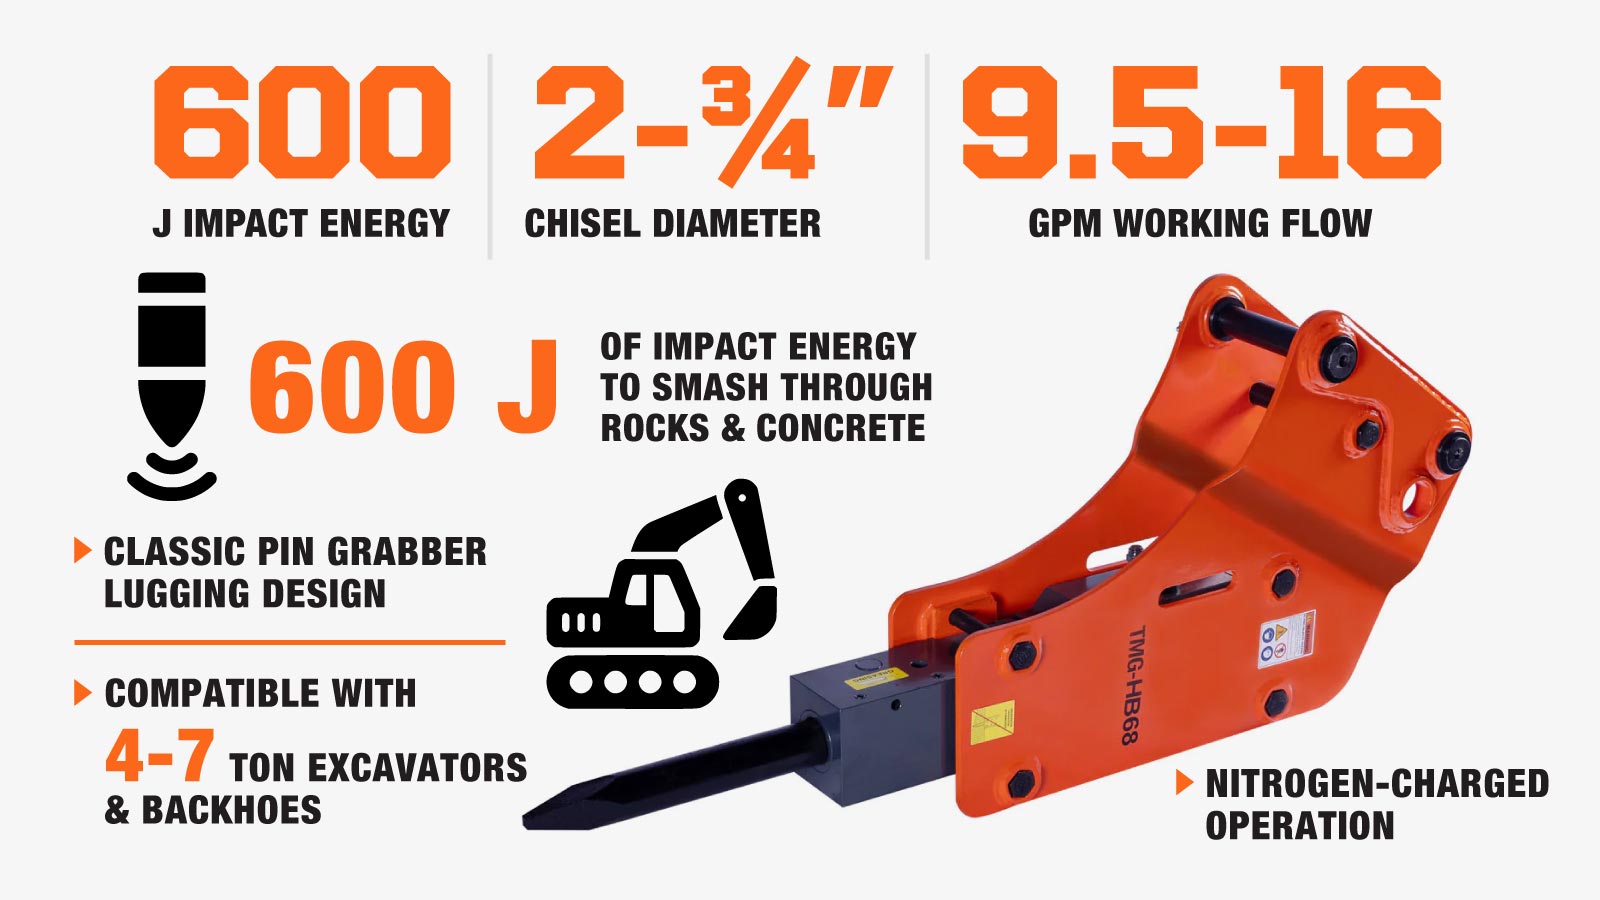 TMG Industrial 4-7 Ton Excavator/Backhoe Hydraulic Hammer Breaker, 2-3/4” Moil Point Chisel, 600 J Impact Energy, Pin Grabber Lugging, TMG-HB68-description-image